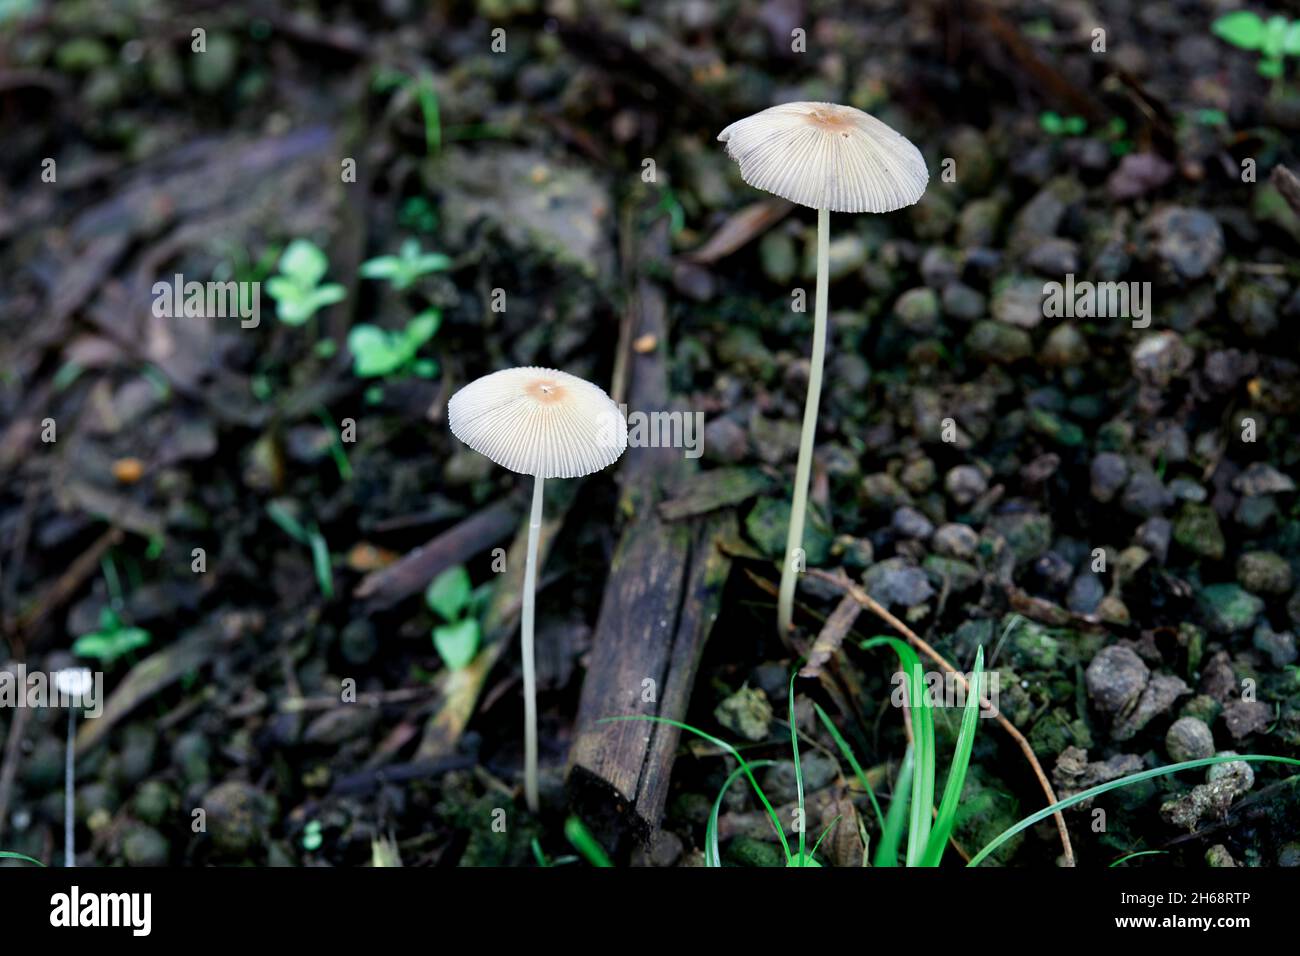 White mushroom growing in garden Stock Photo